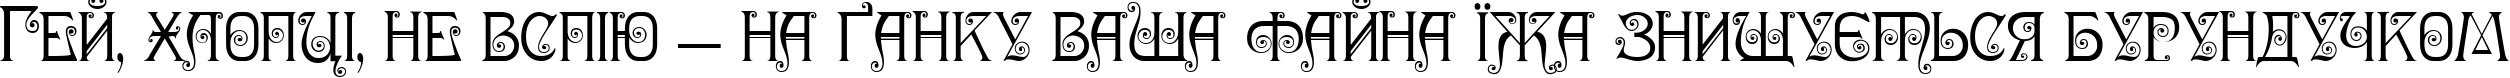 Пример написания шрифтом Nympha Two текста на украинском